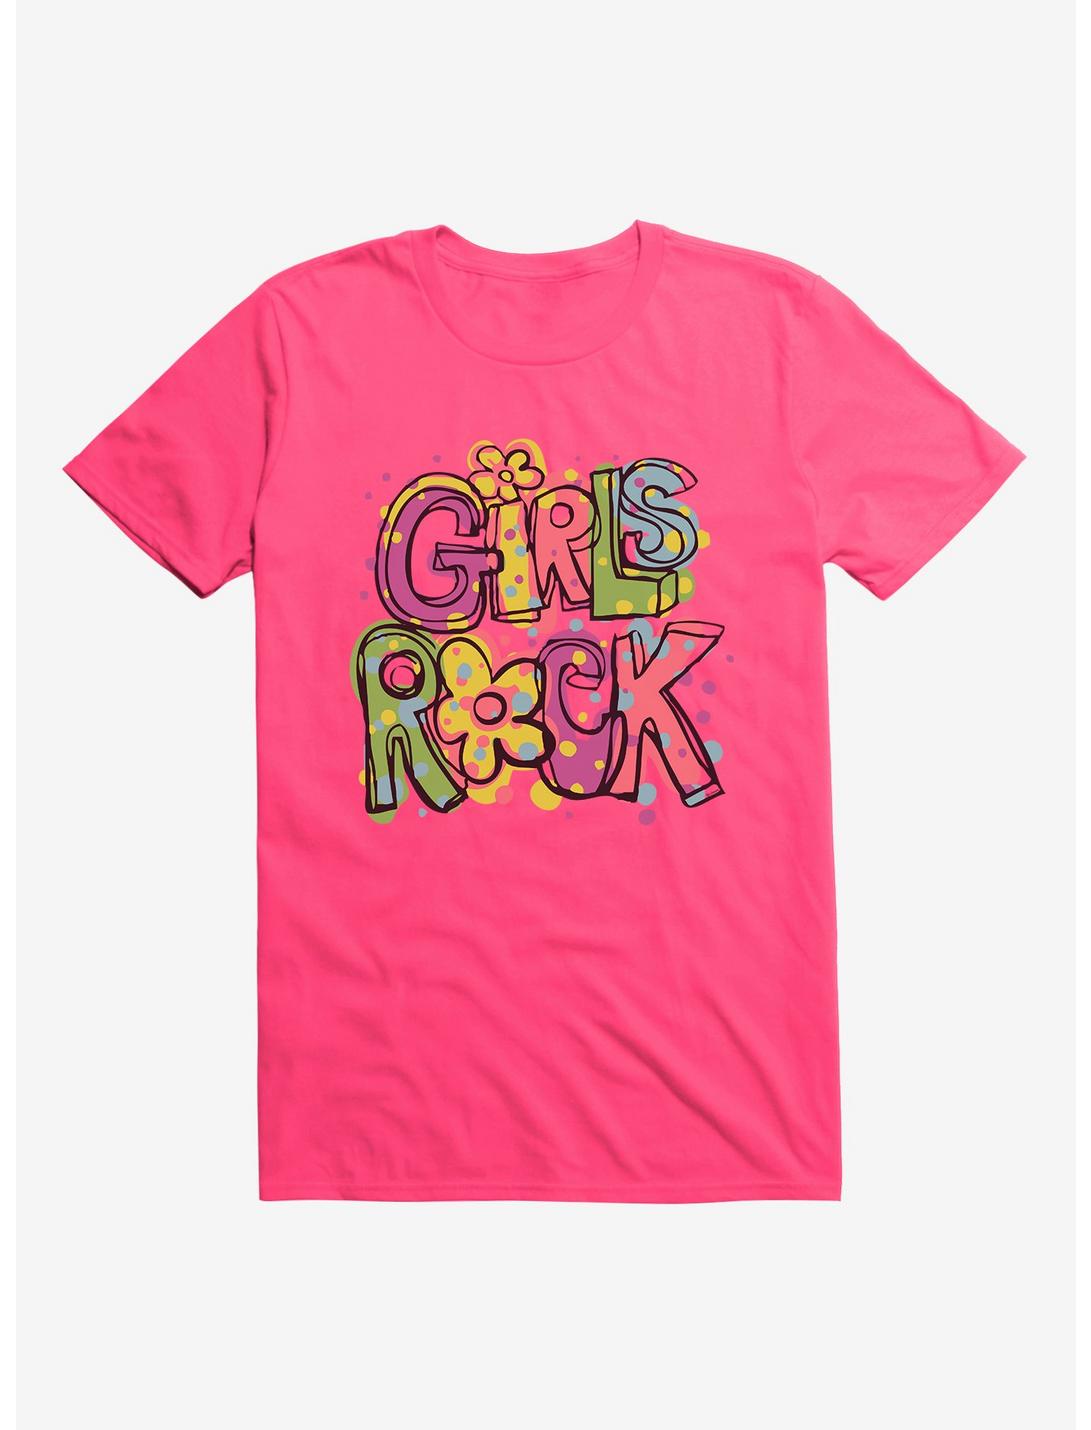 iCreate Girls Rock T-Shirt, , hi-res